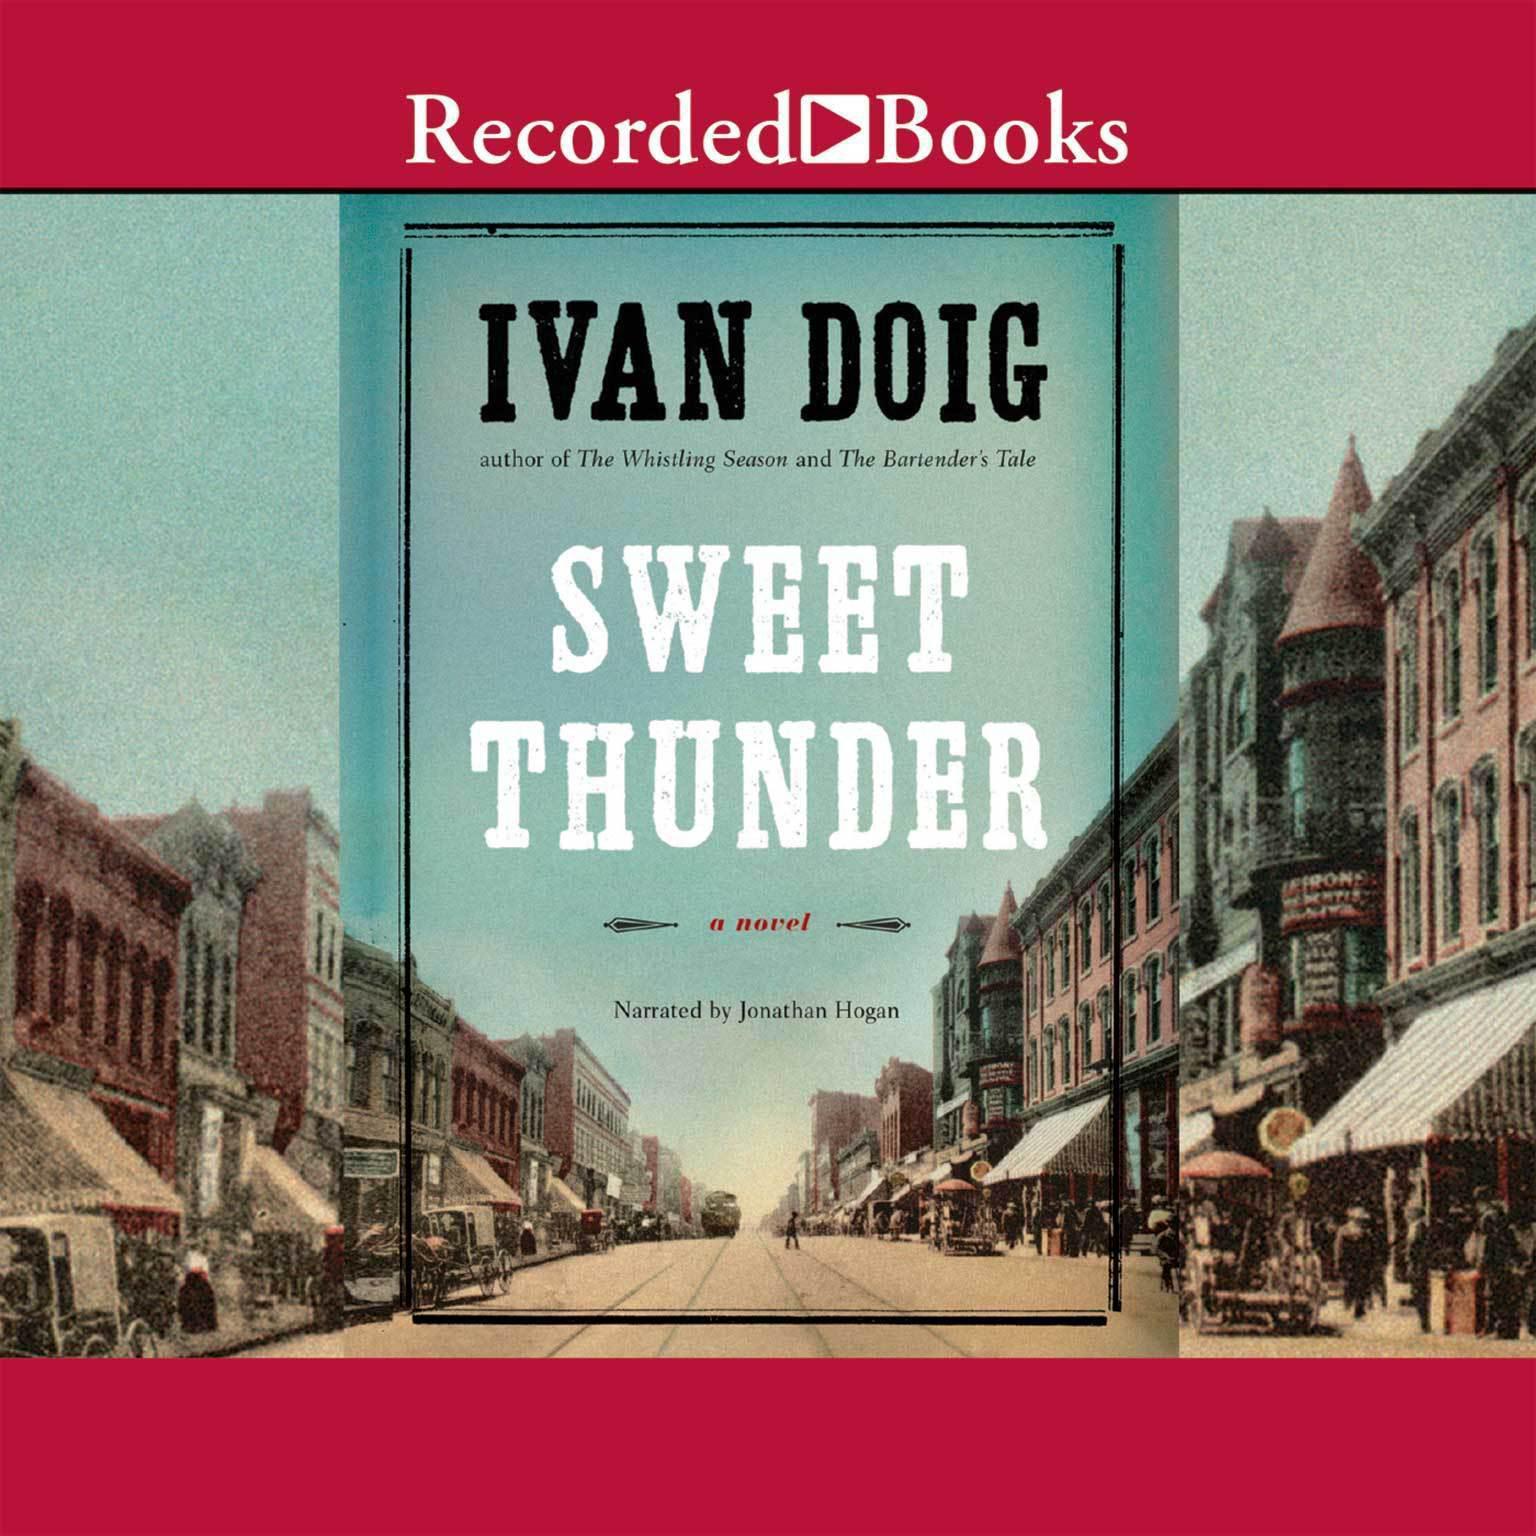 Sweet Thunder: A Novel Audiobook, by Ivan Doig